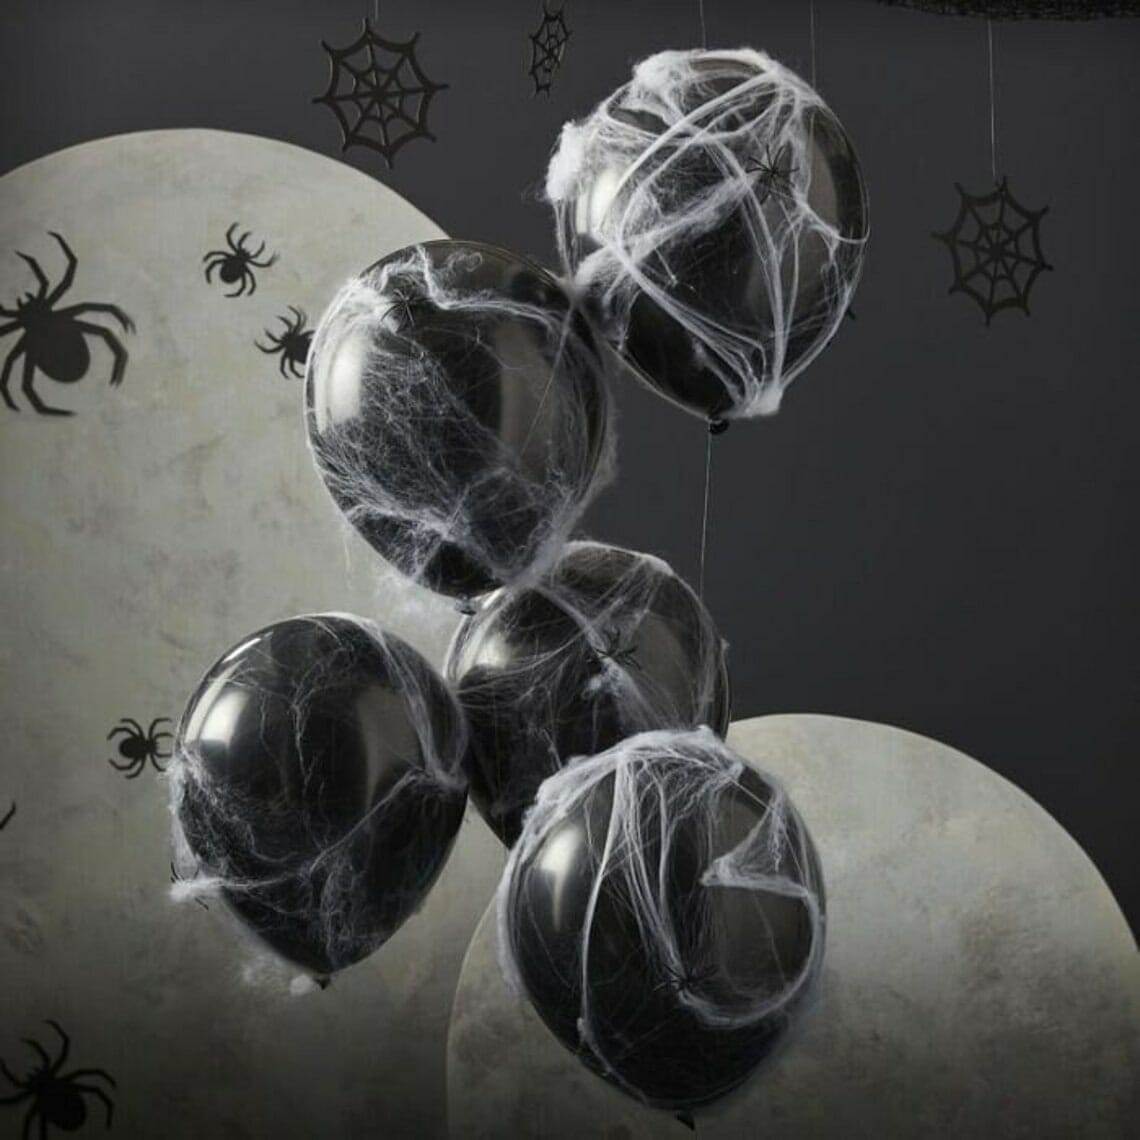 spider web balloons